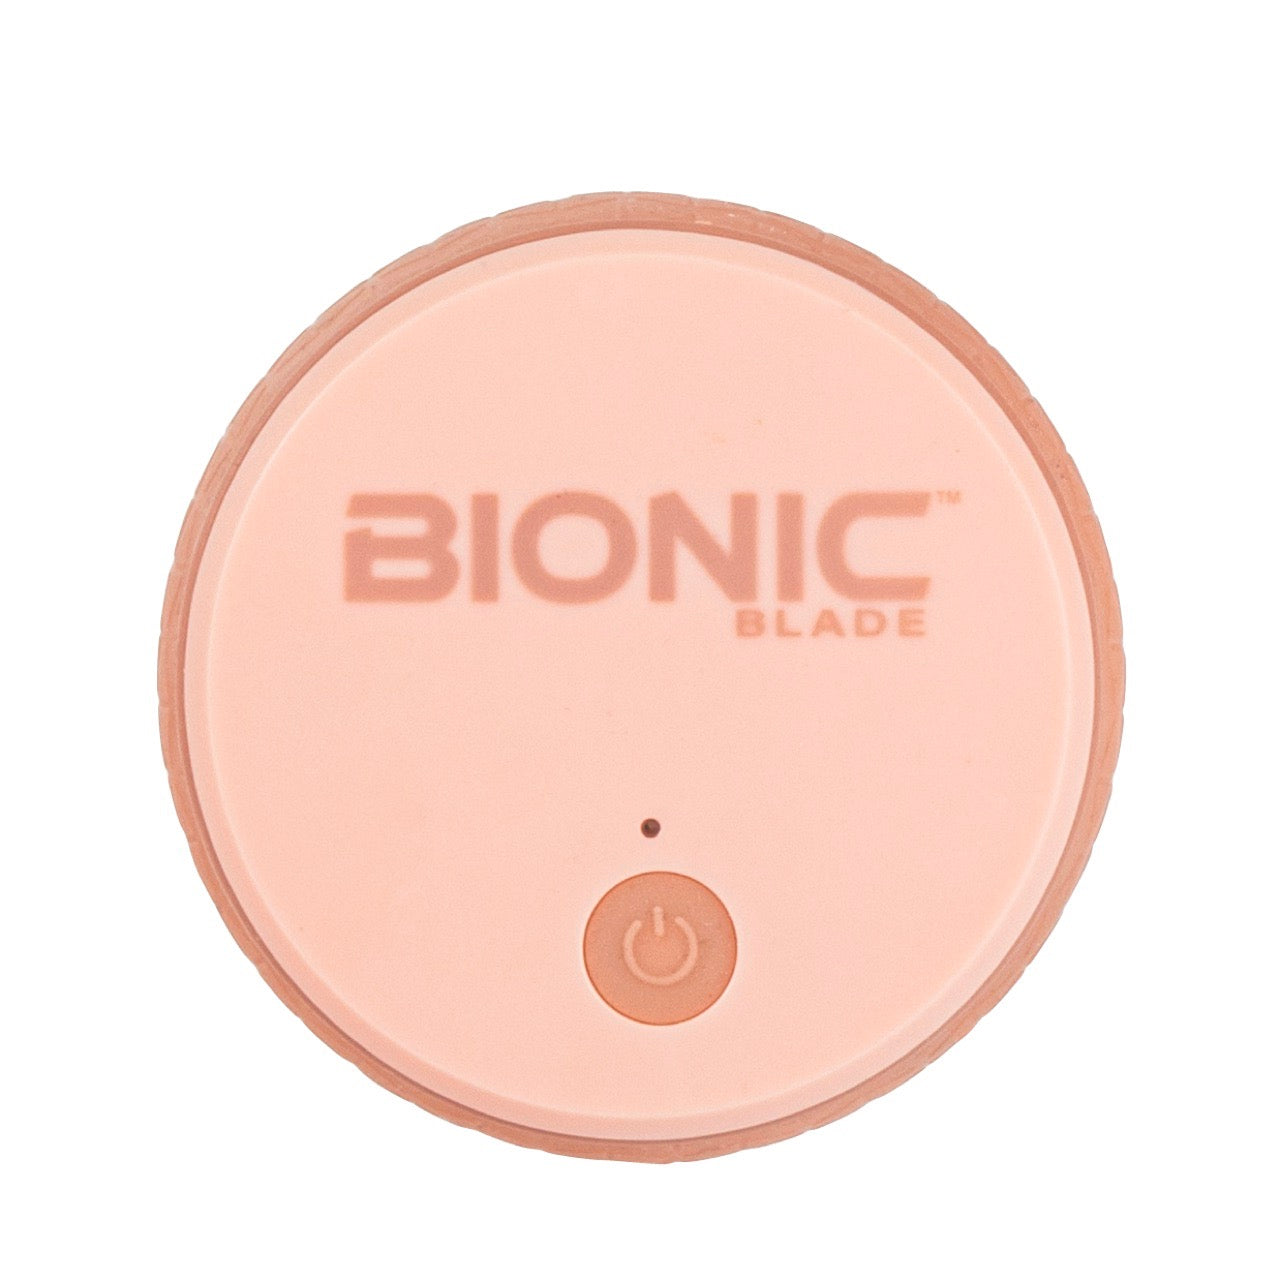 Bionic Blade Portable Blender - 18,000 RPM, USB Rechargeable Battery, Multiple Colors, Peach